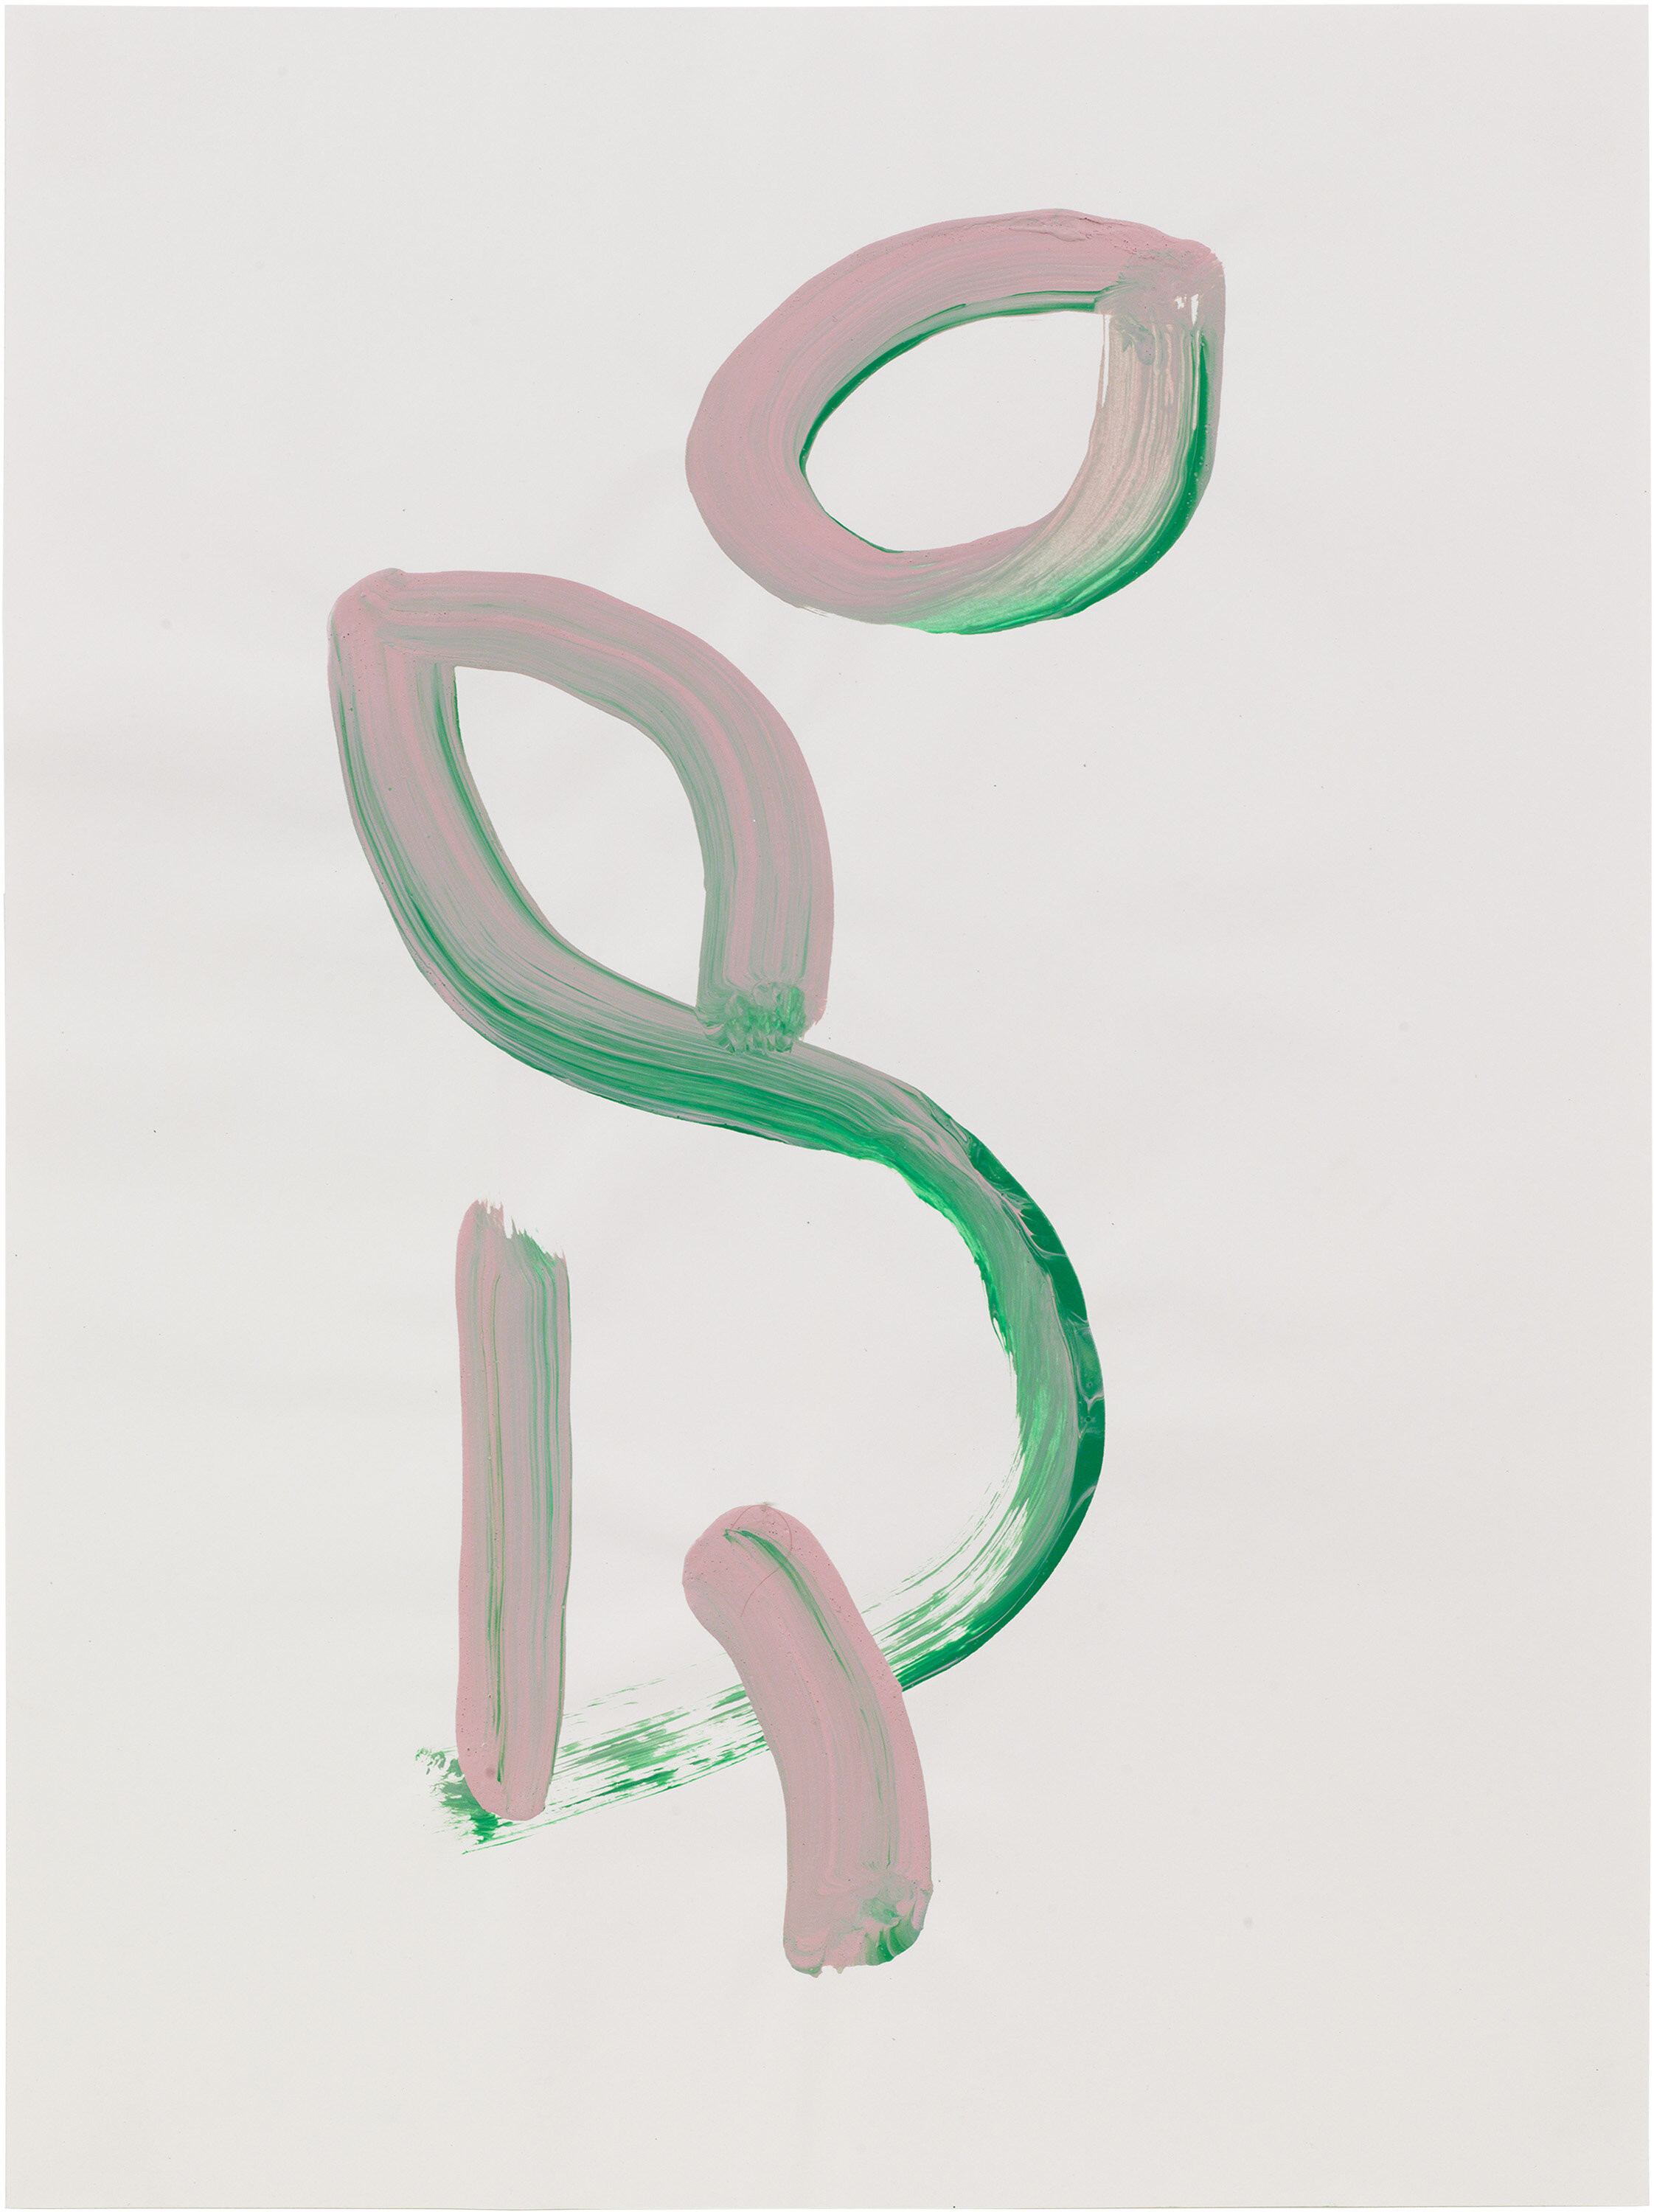  Drew Beattie and Ben Shepard   DBBS-DRW-2015-219   2015  acrylic on paper 24 x 18 inches 